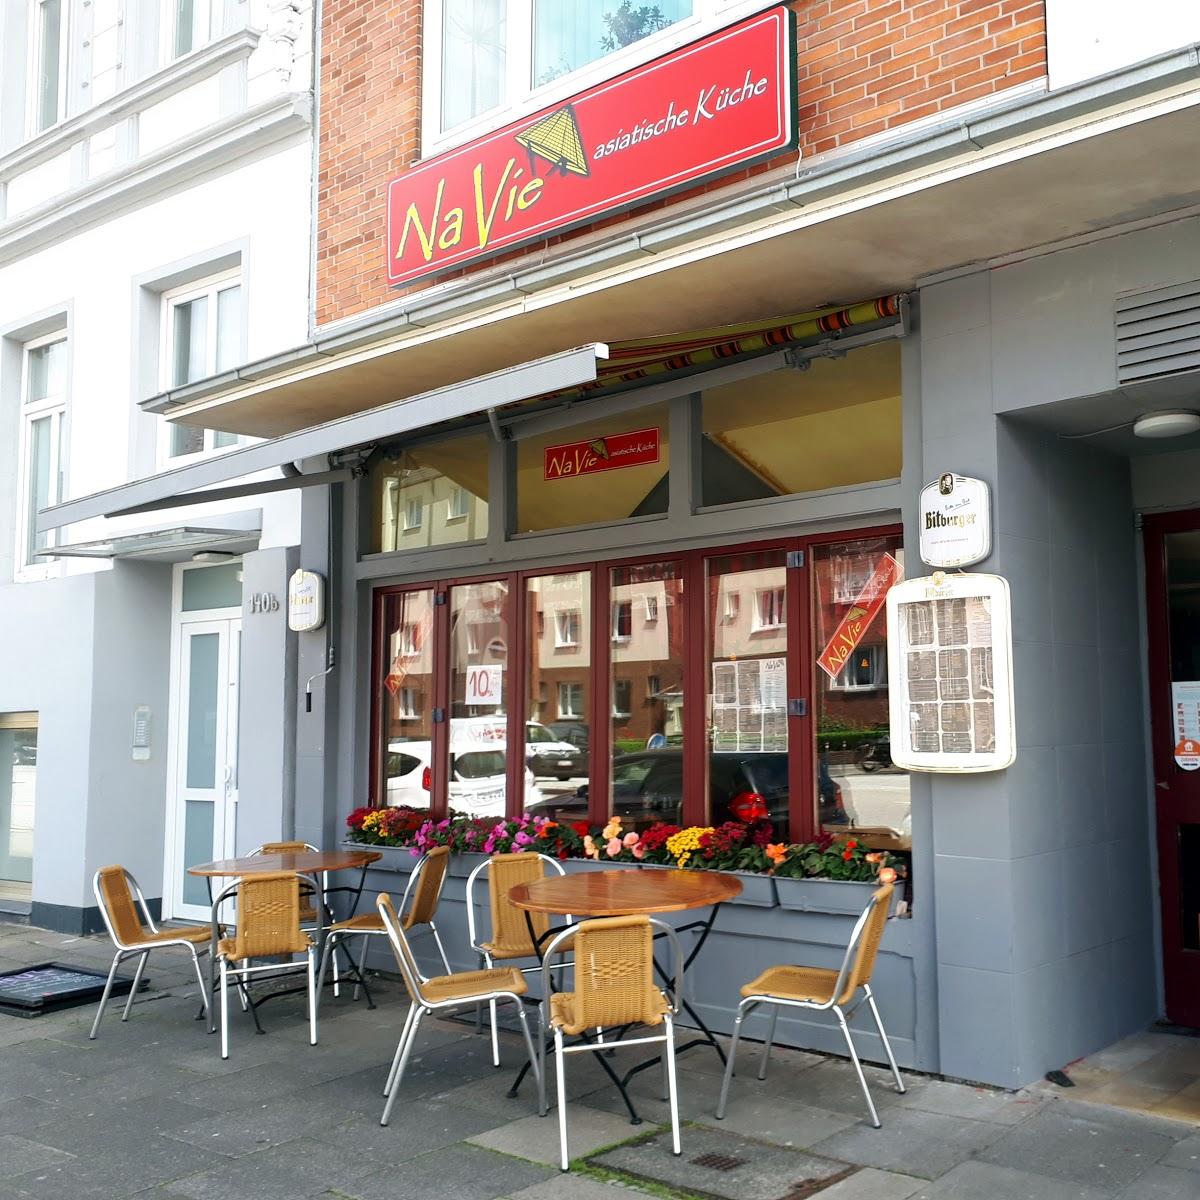 Restaurant "Navie Restaurant" in Kiel